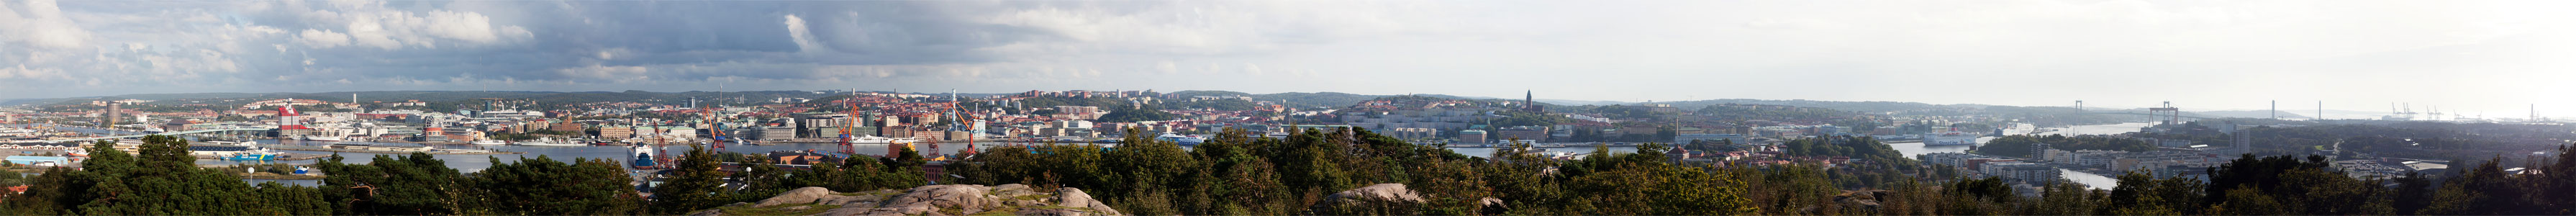 Panorama picture of Gothenburg